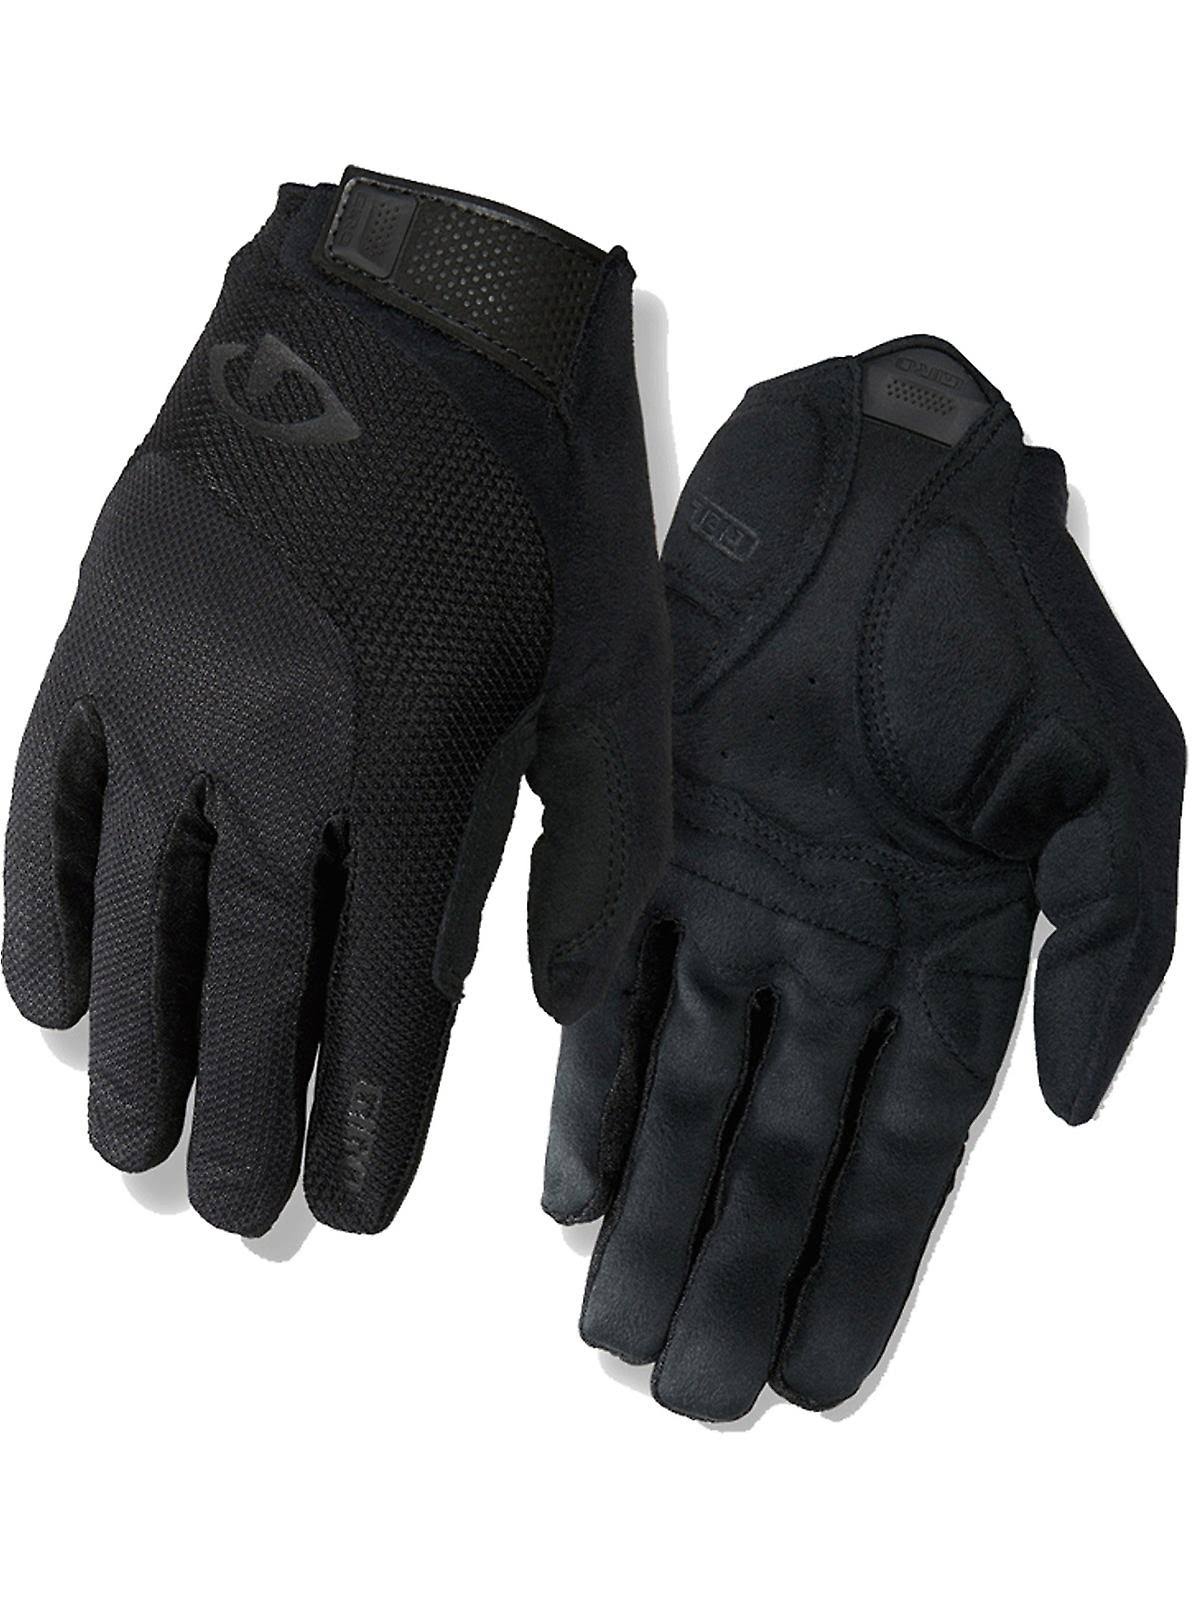 Giro Men's Bravo Gel LF Bike Gloves - Black, M